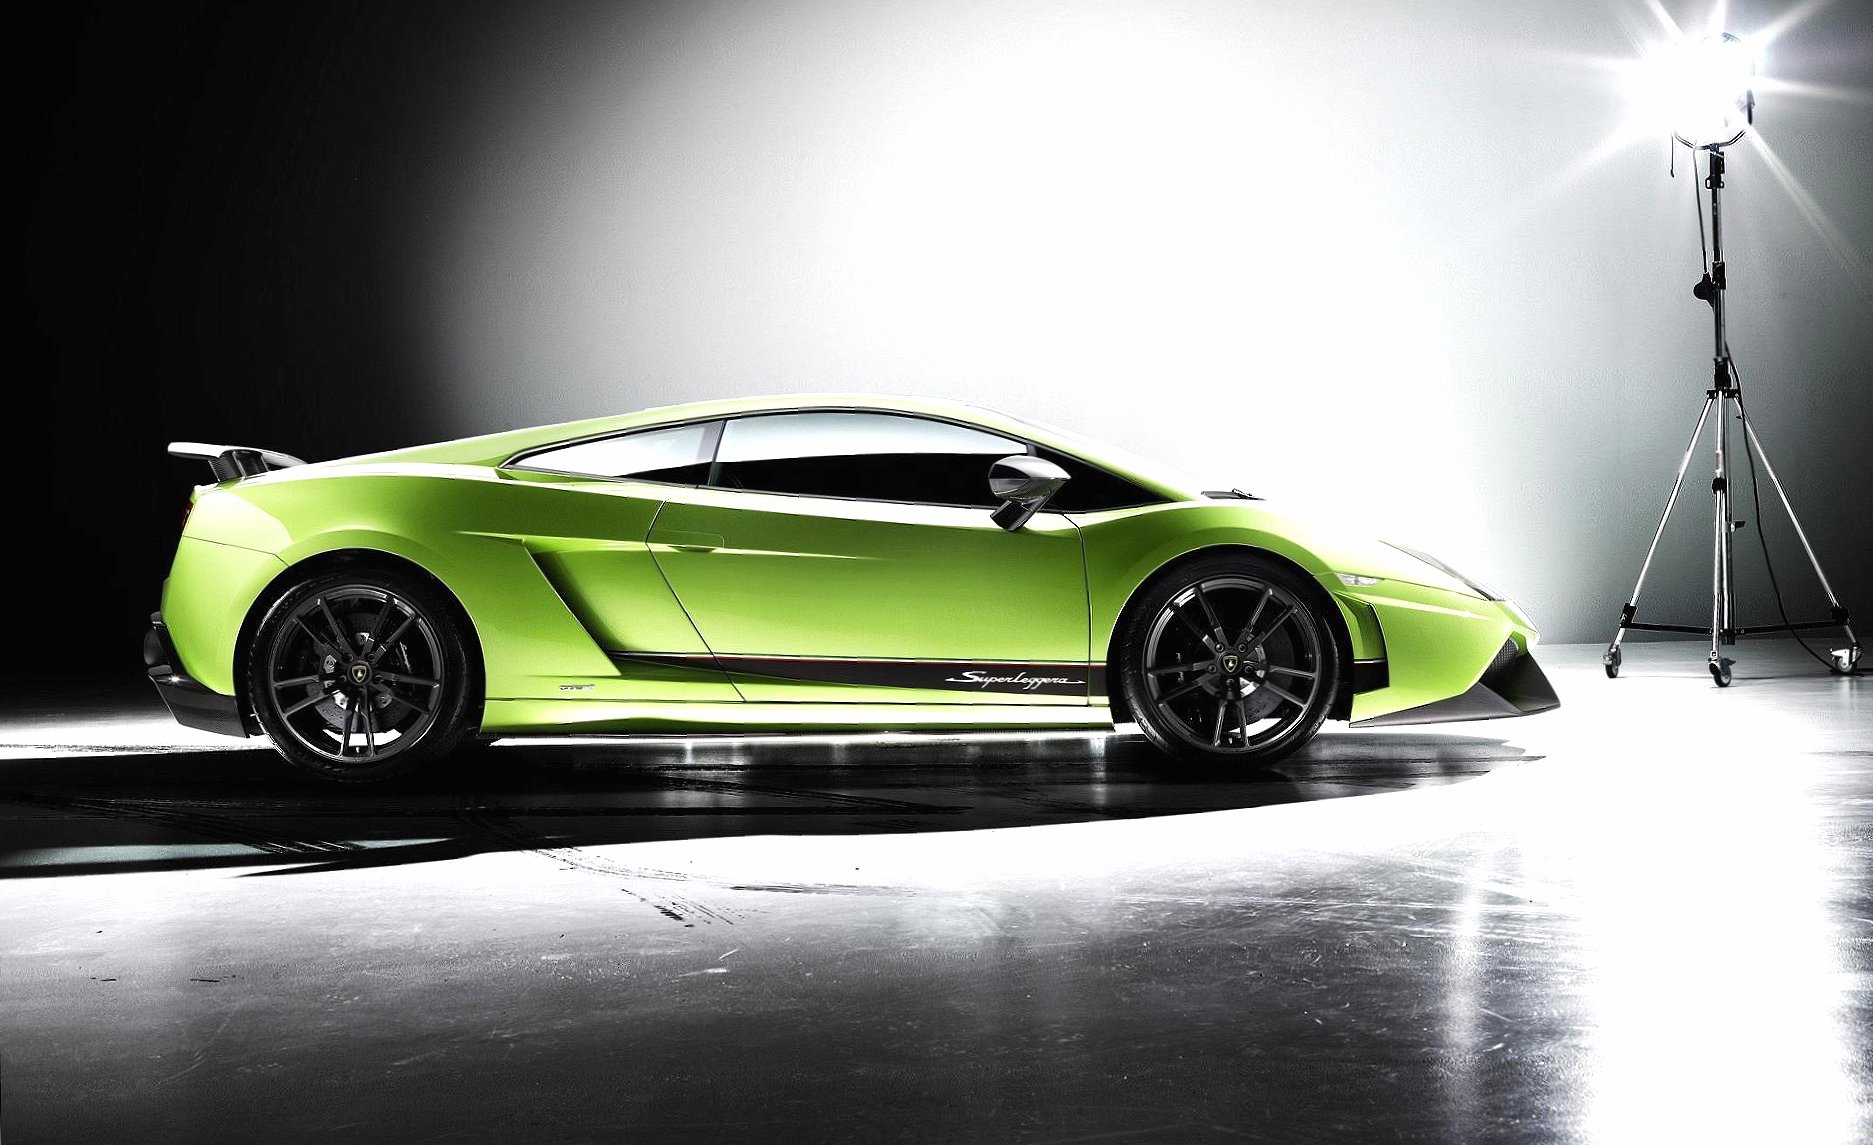 Lamborghini gallardo lp 570 4 superleggera at 1024 x 768 size wallpapers HD quality